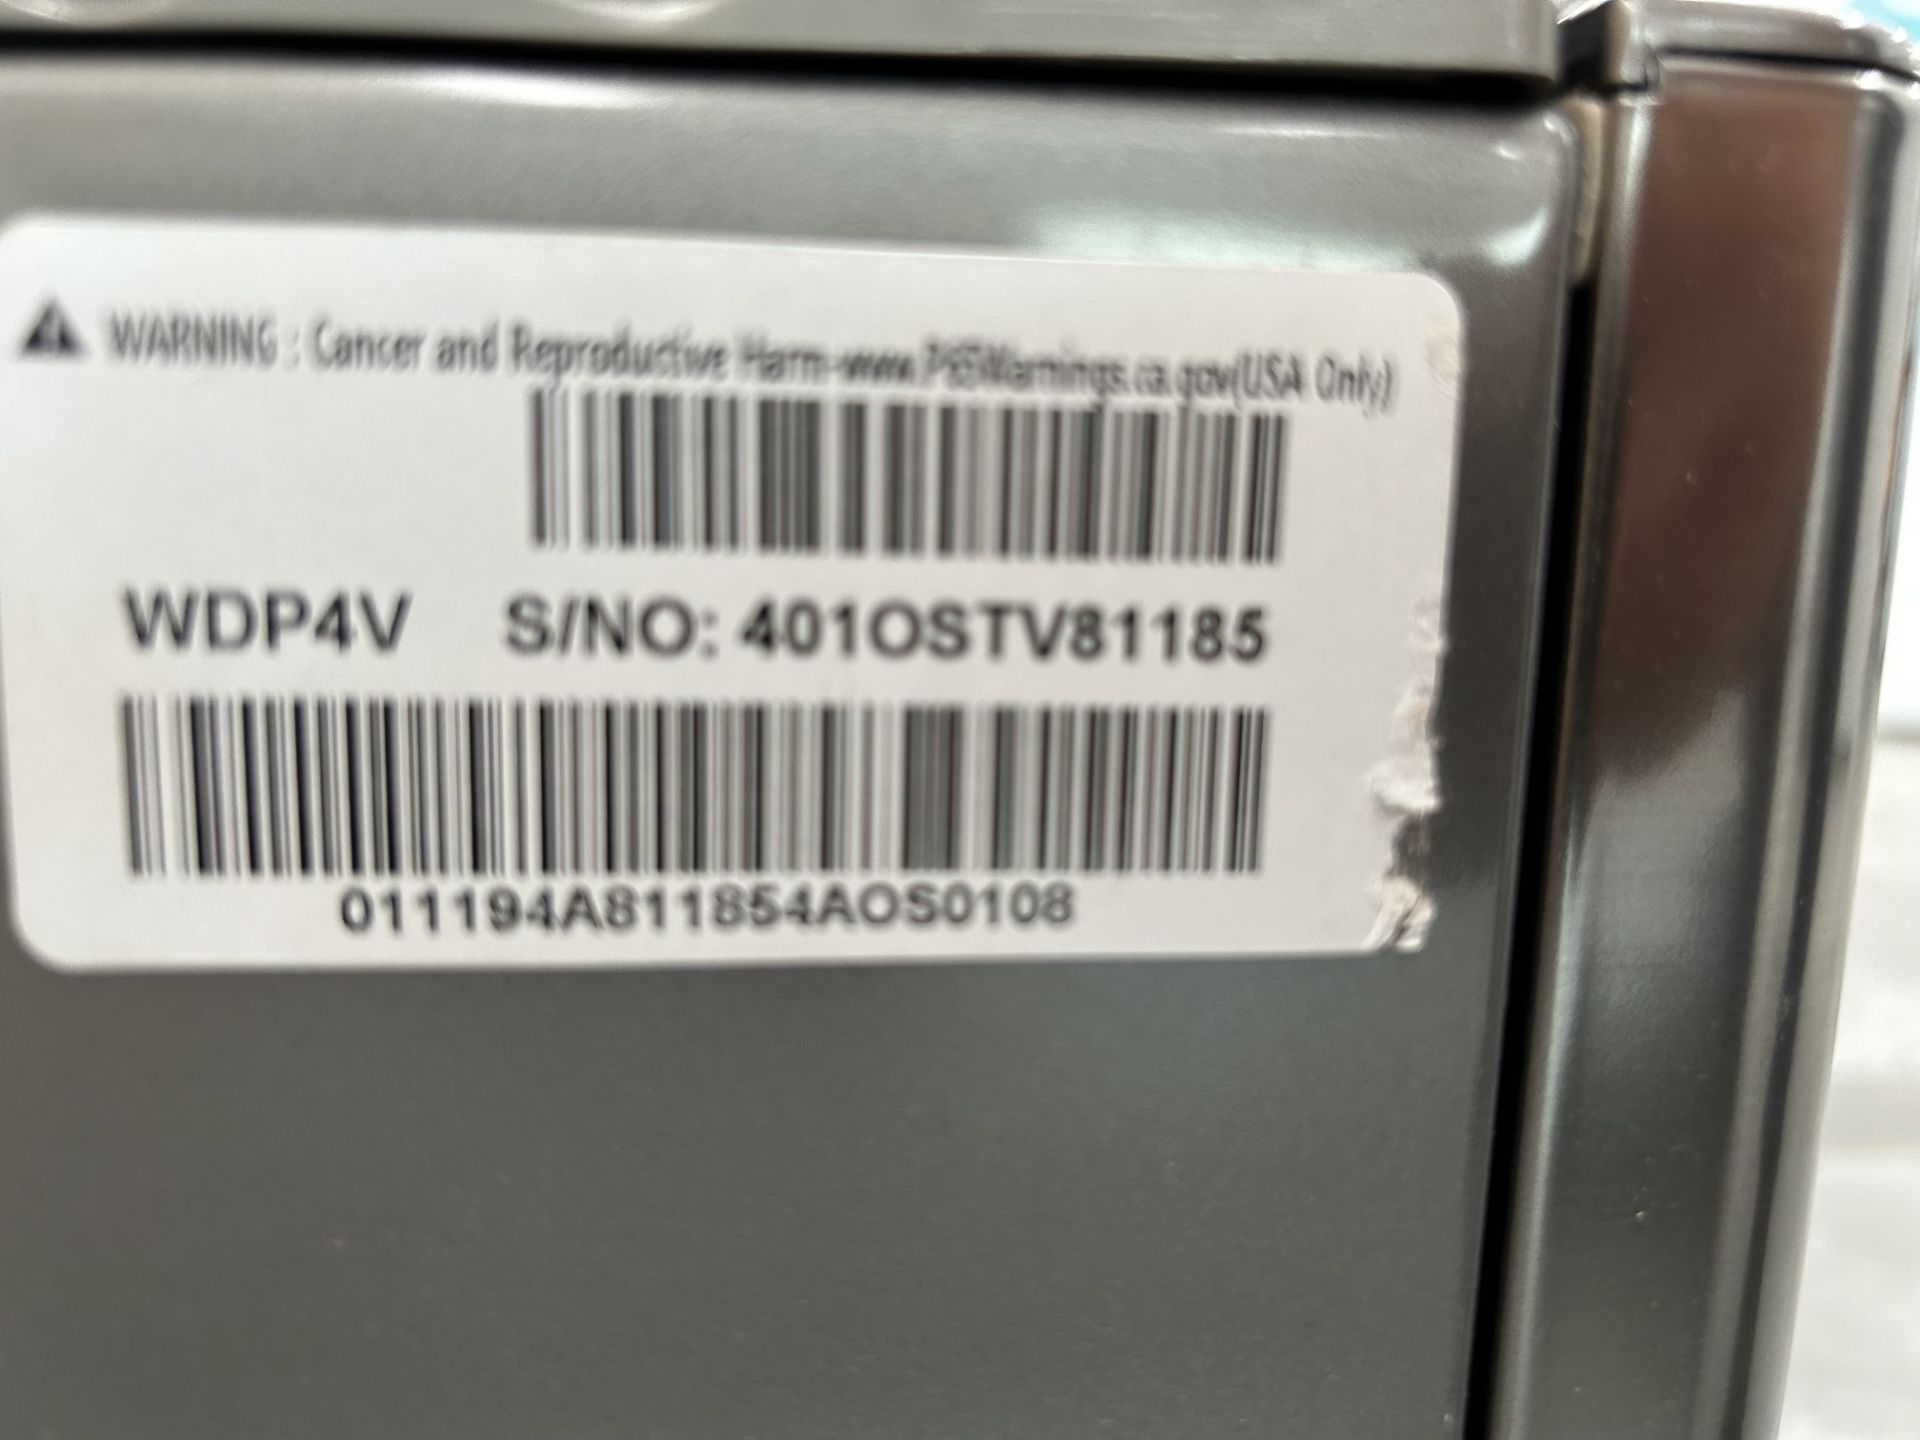 Lavadora Frontal de 22 Kg con pedestal integrado Marca LG Modelo WM22W2S6R, Serie Z17856, Color GRI - Image 6 of 8